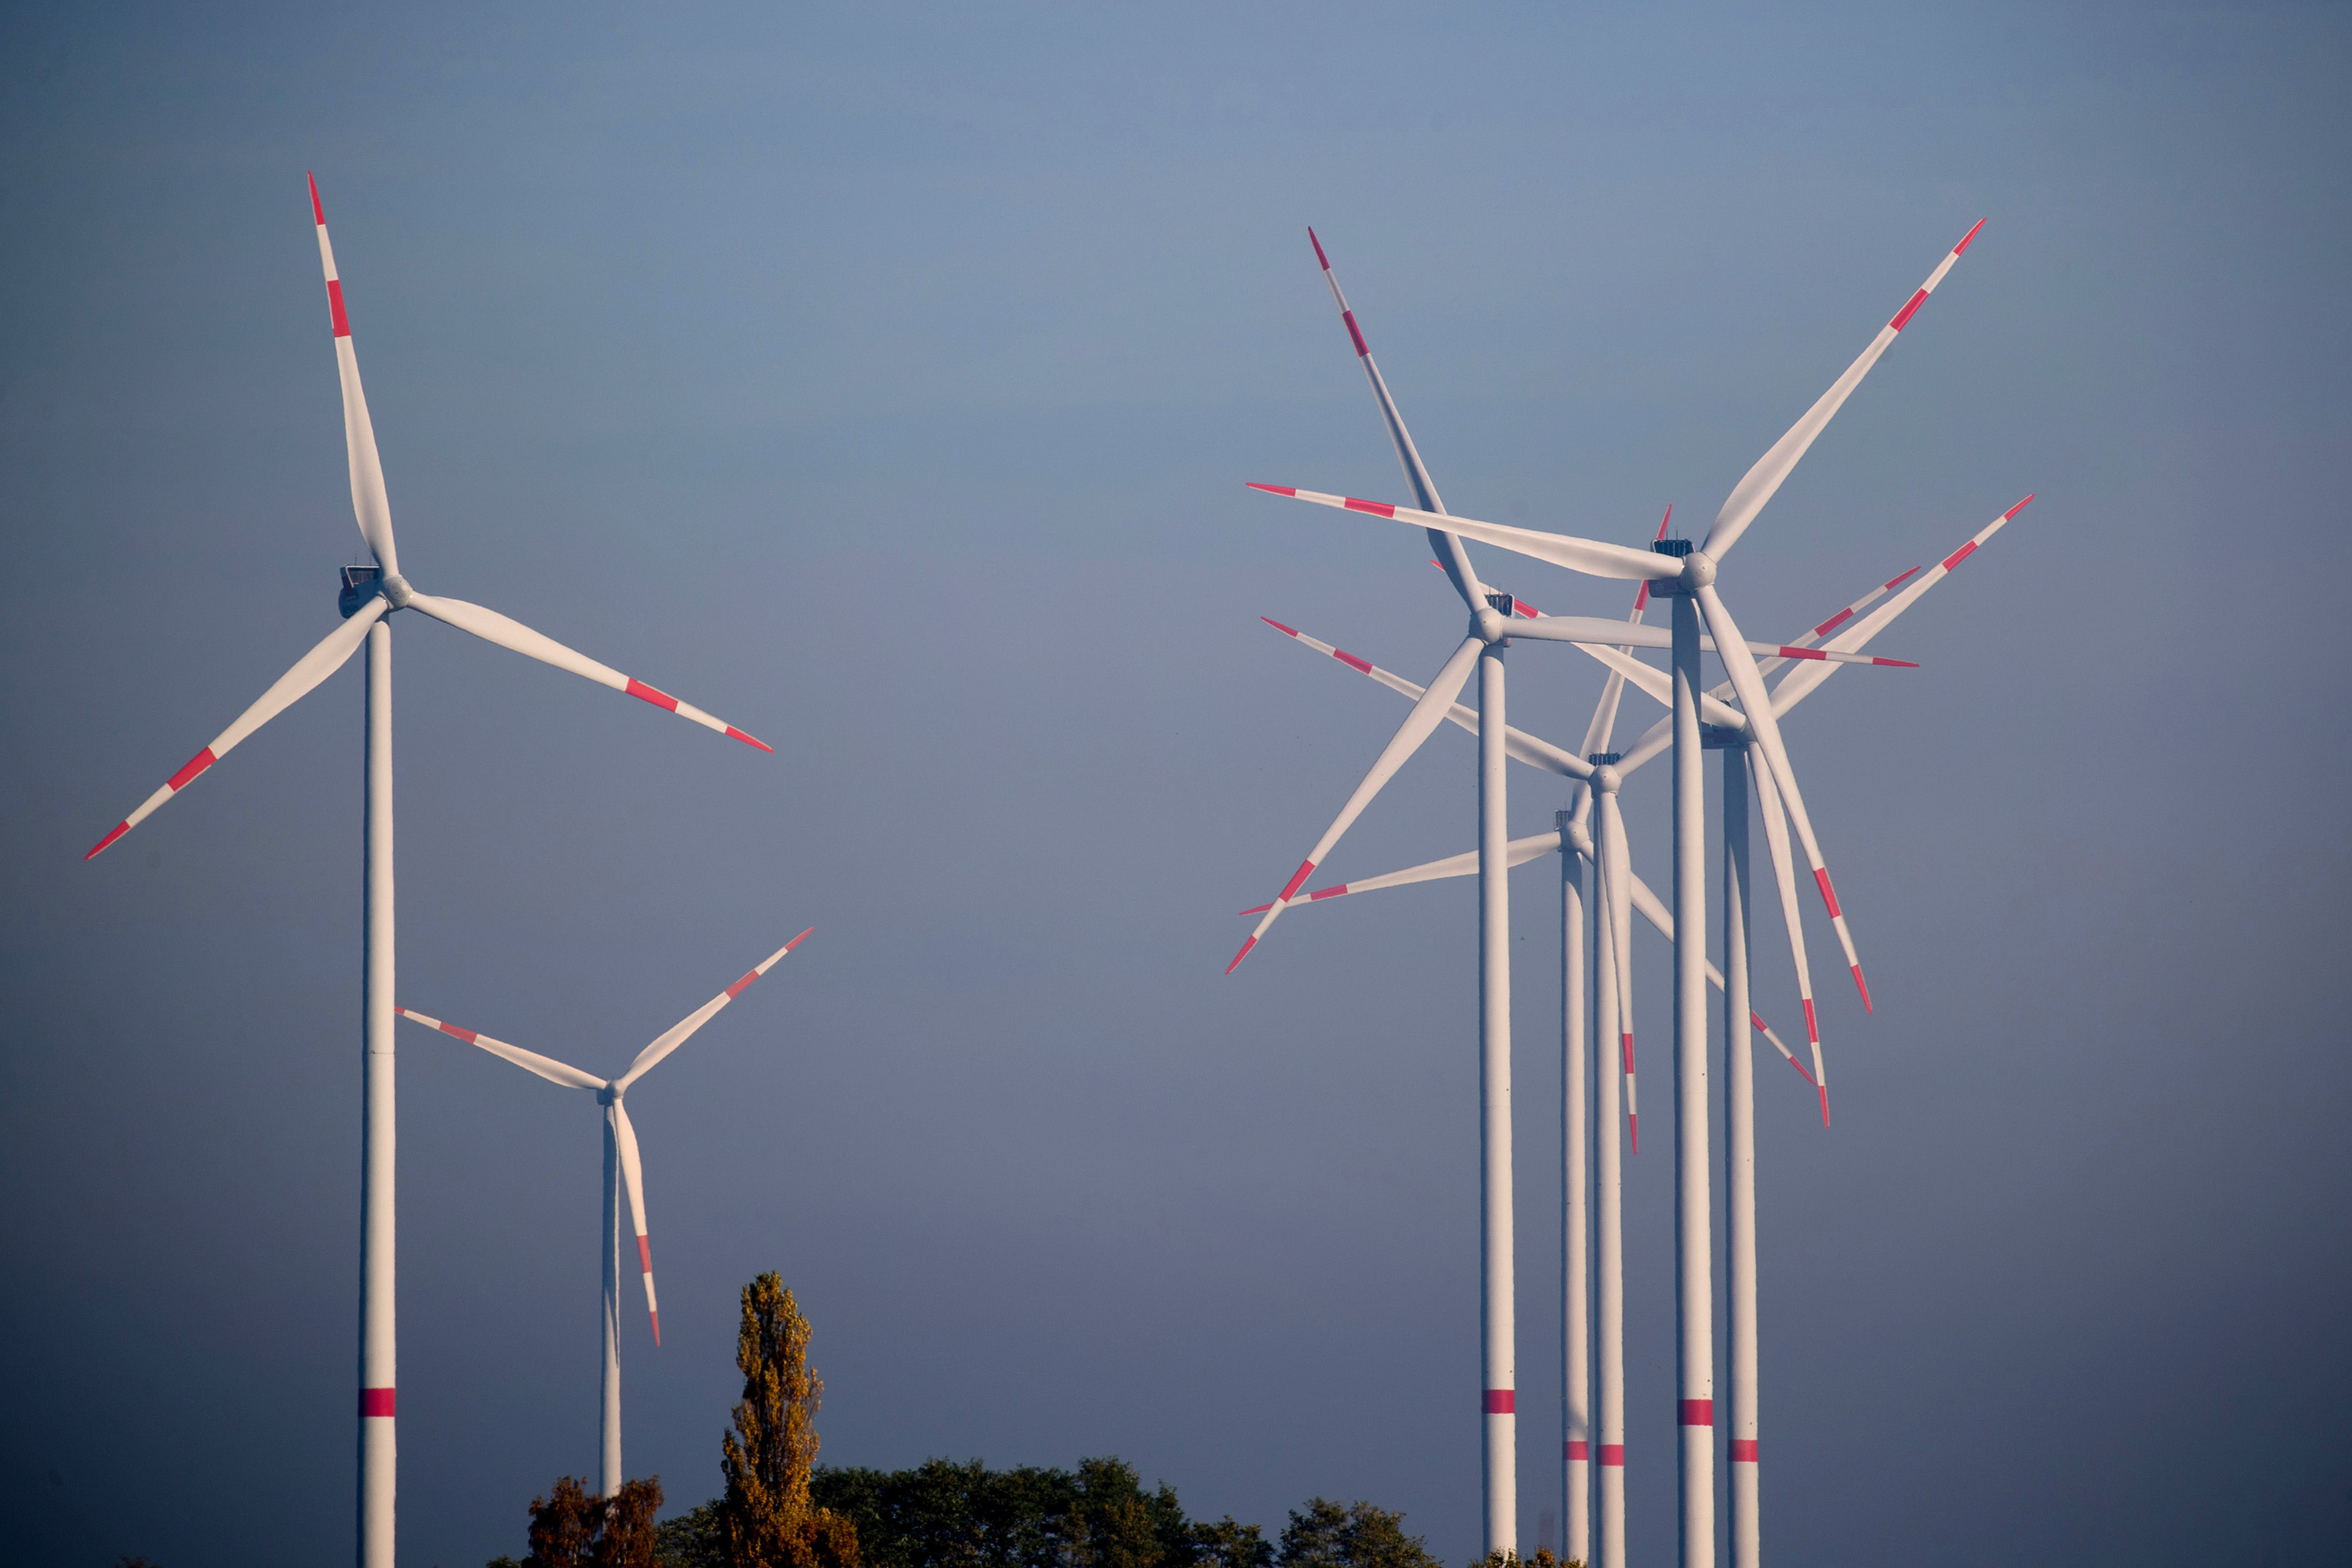 Turbine Collapse Spurs TransAlta to Rebuild Canada Wind Farm - Bloomberg